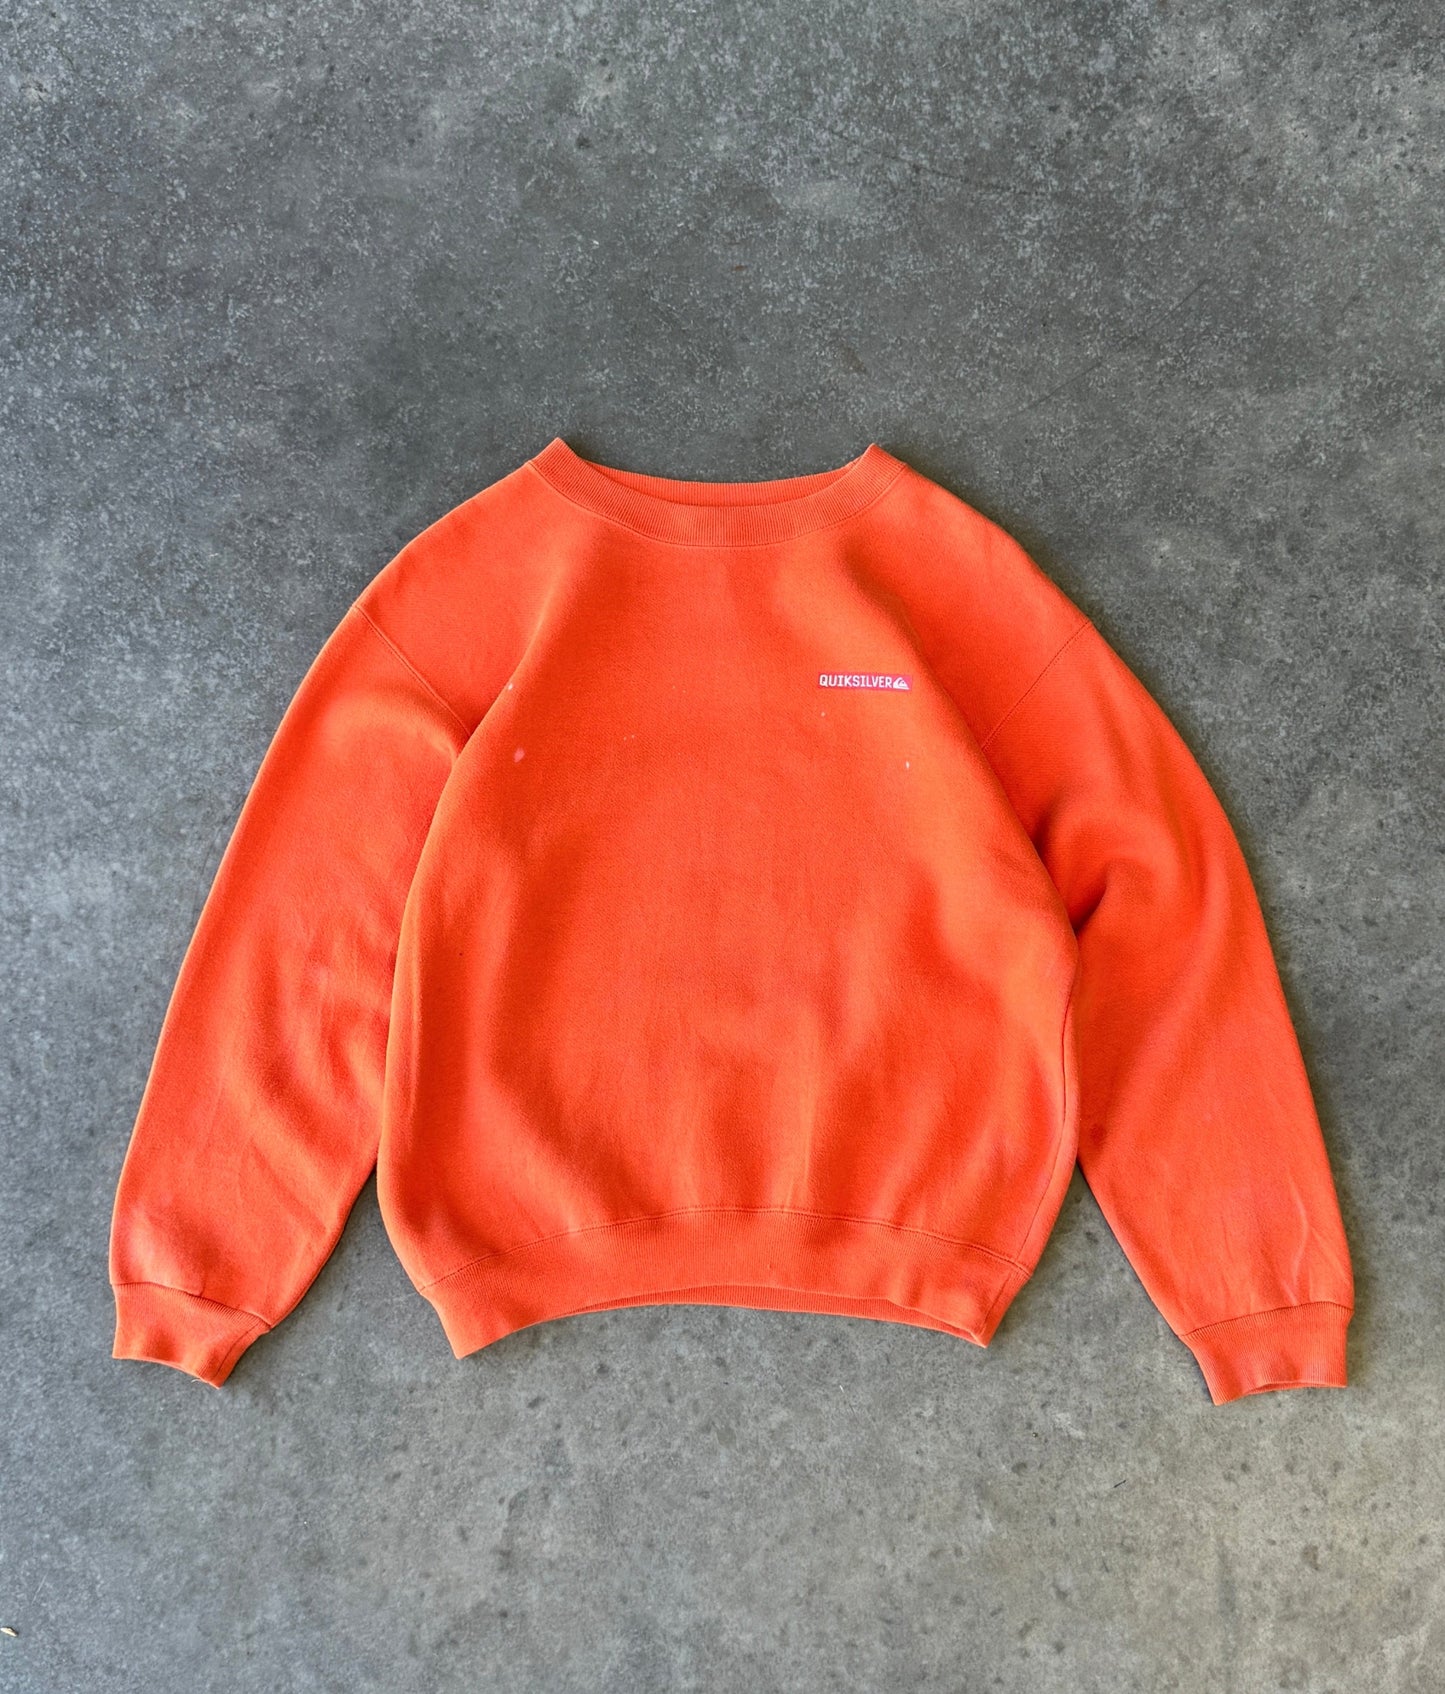 Vintage 00s Quiksilver Sweater (S)